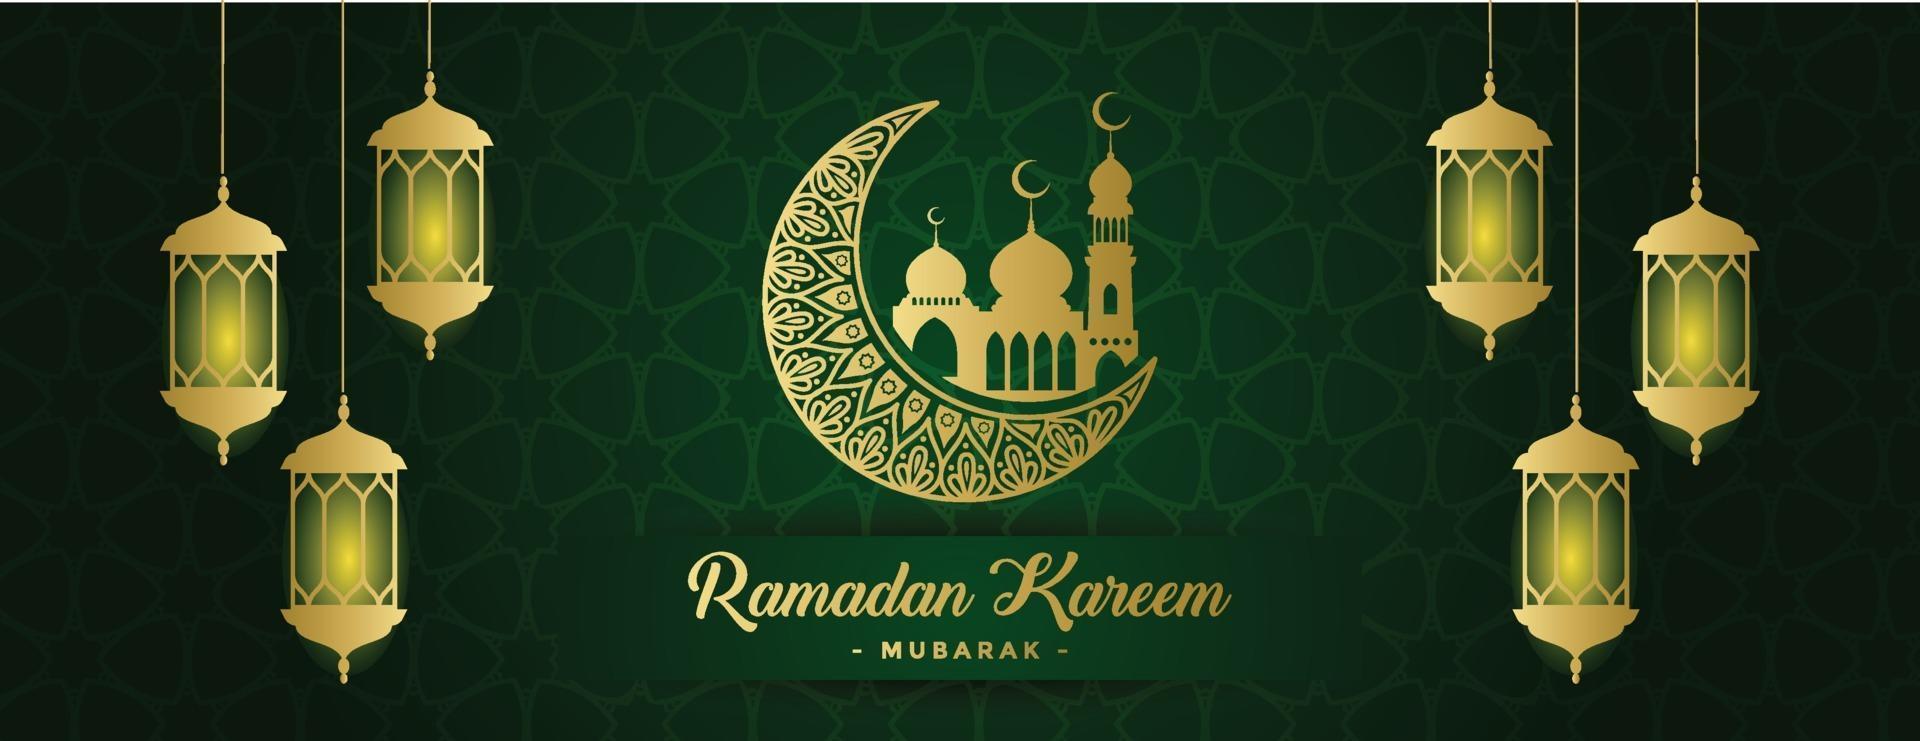 plantilla de fondo de banner de ramadan kareem vector